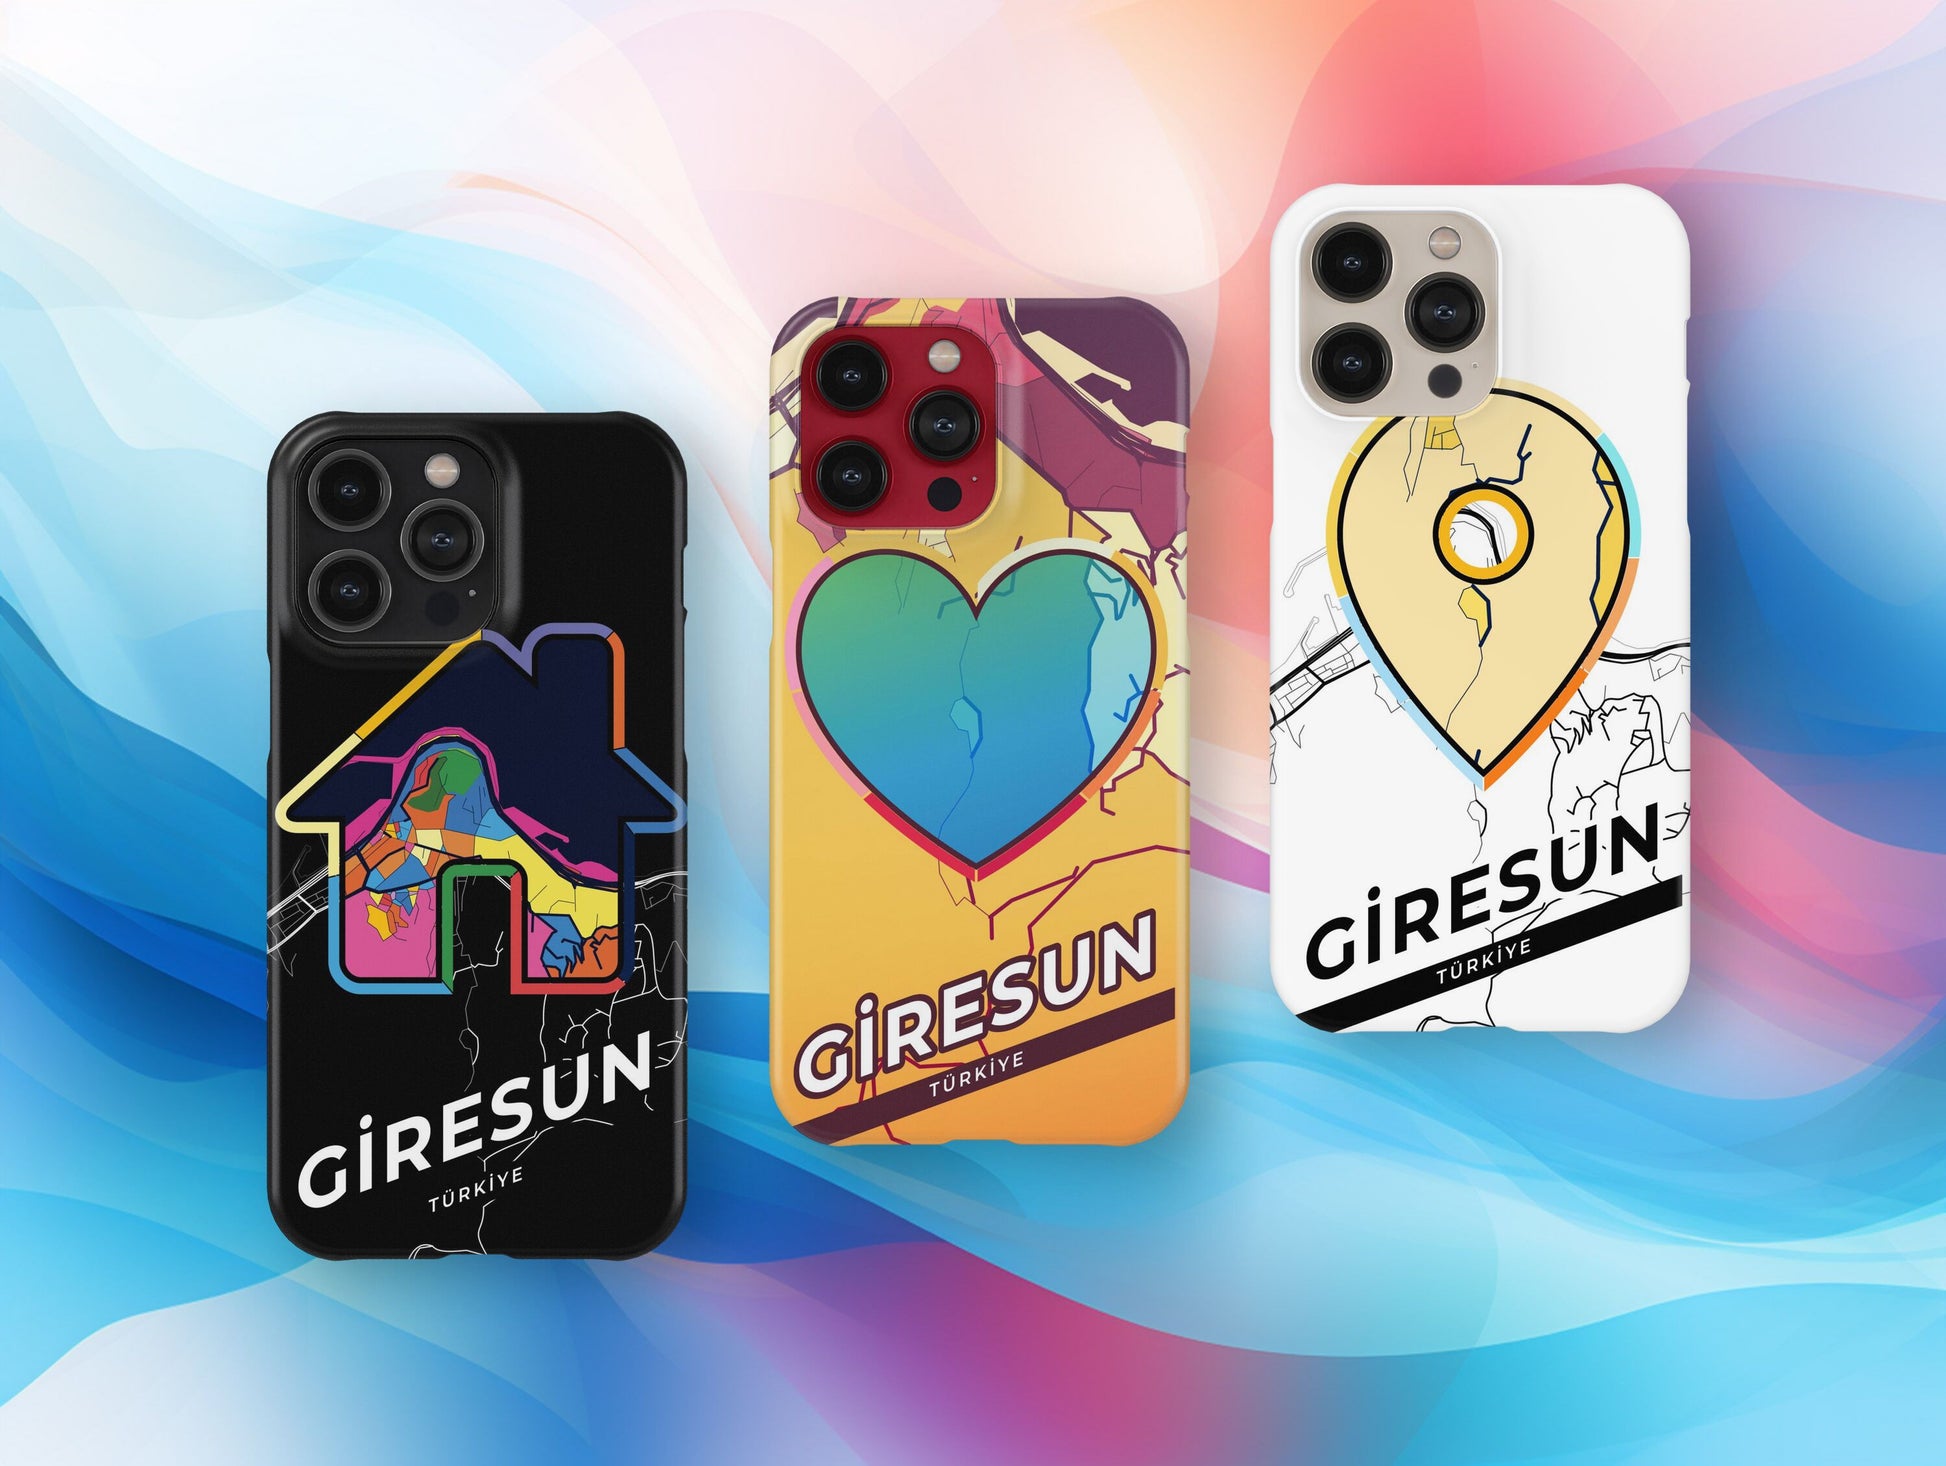 Giresun Turkey slim phone case with colorful icon. Birthday, wedding or housewarming gift. Couple match cases.